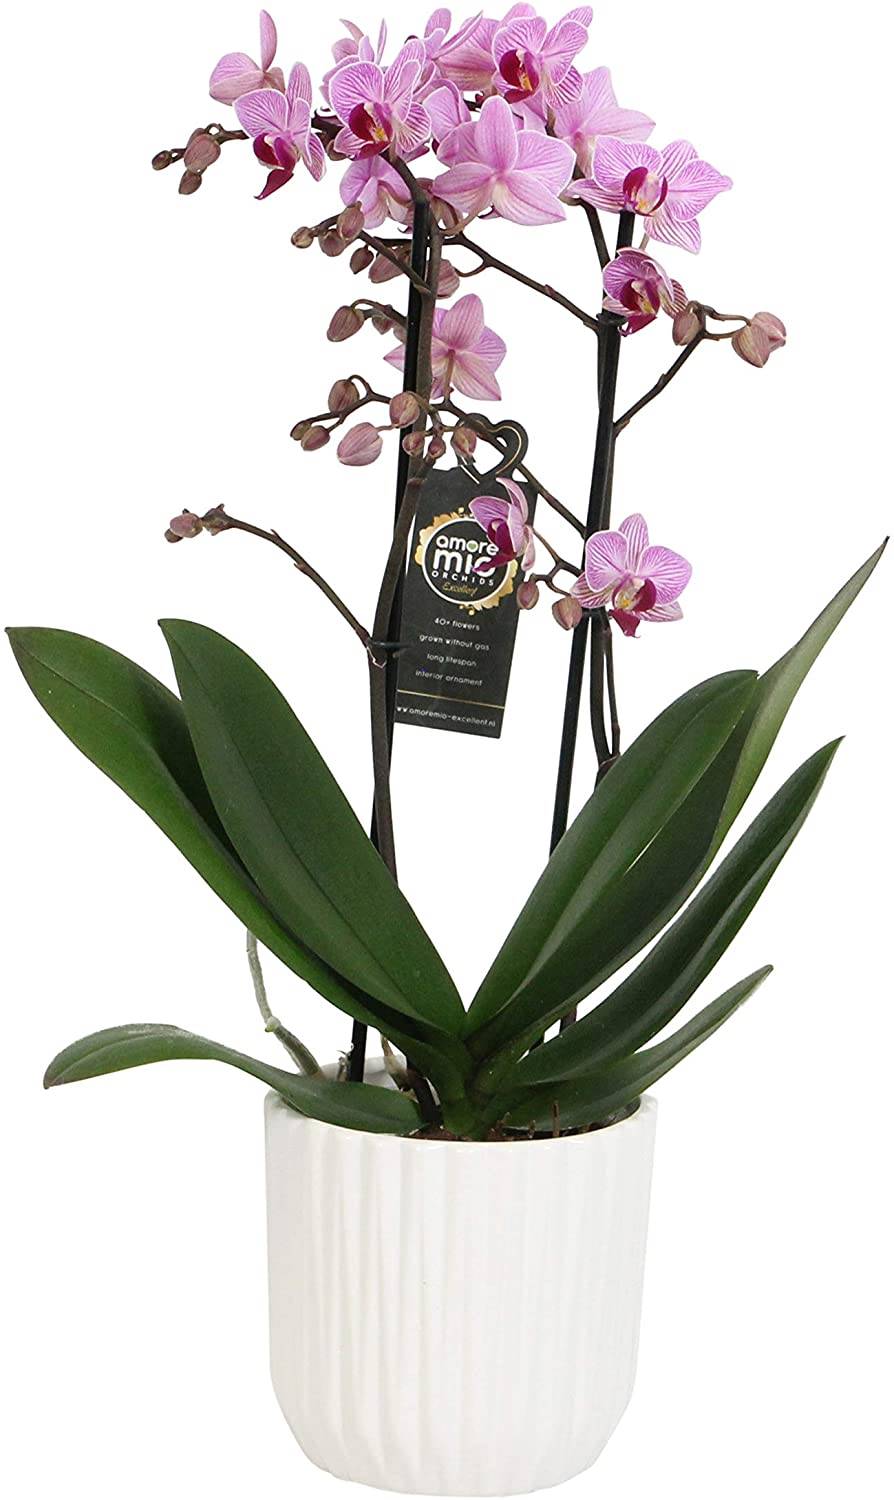 orquidea amazon